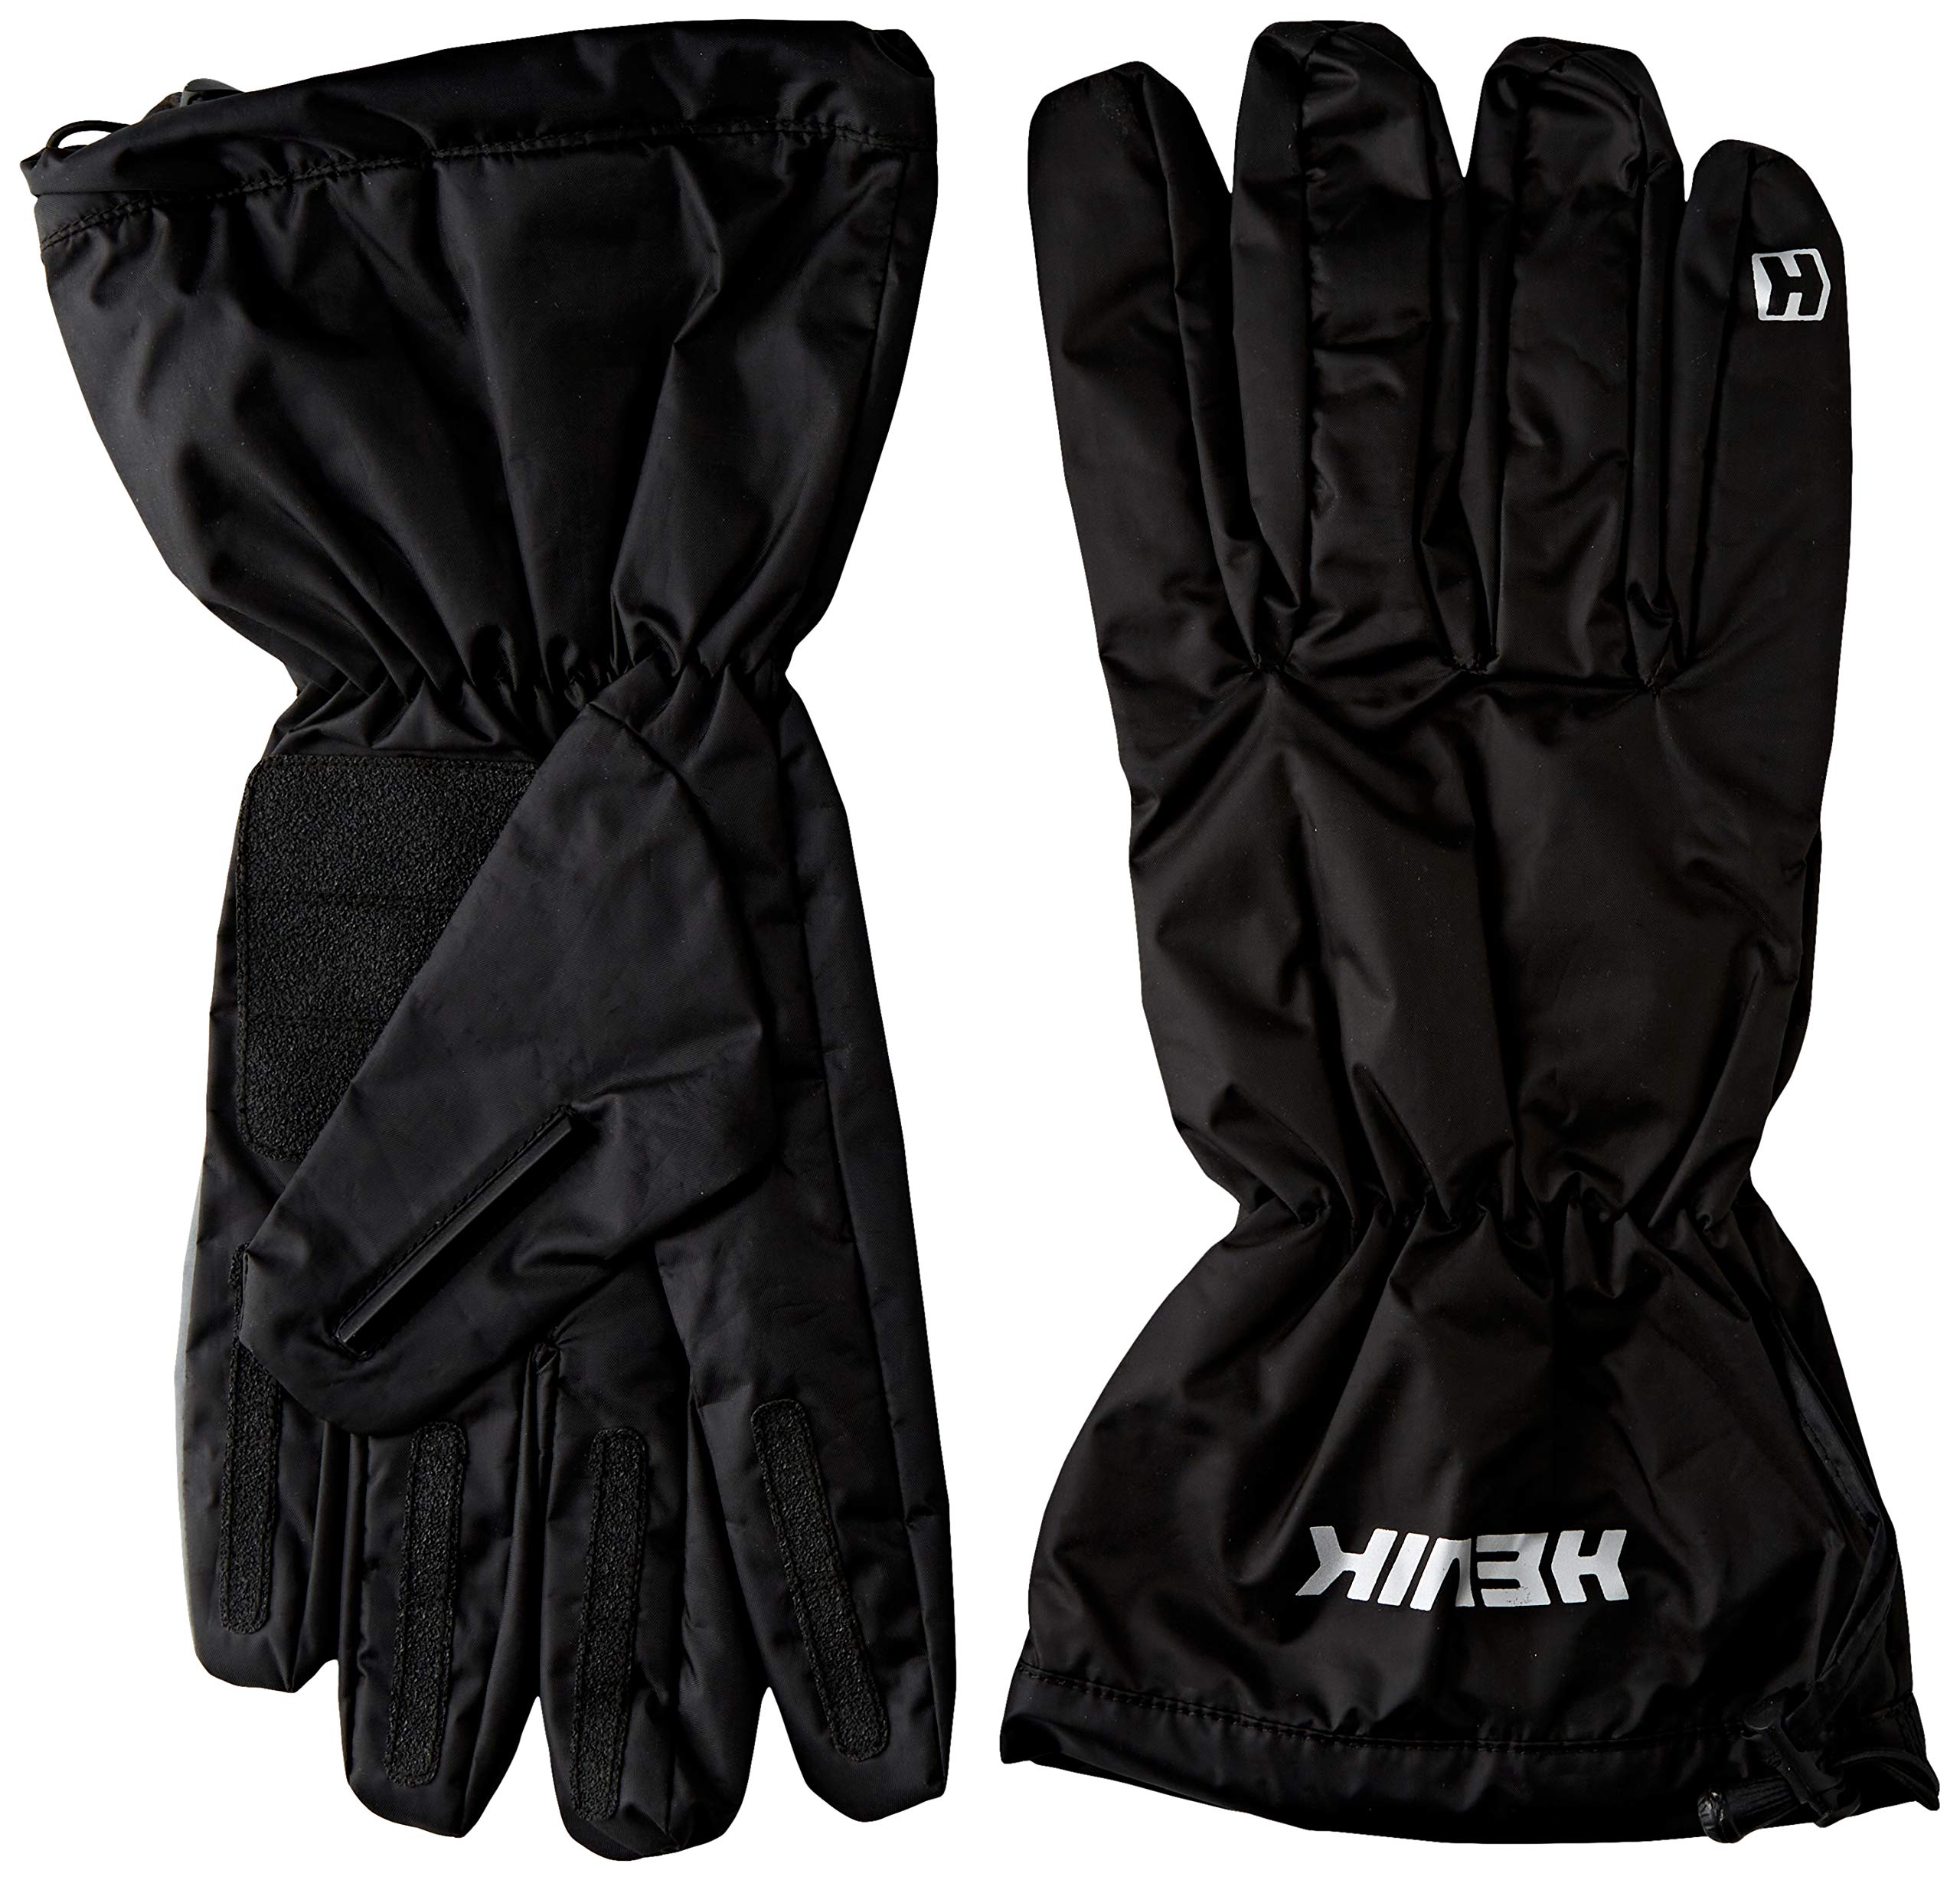 HEVIK Winter über Handschuhe, Mehrfarbig, XL